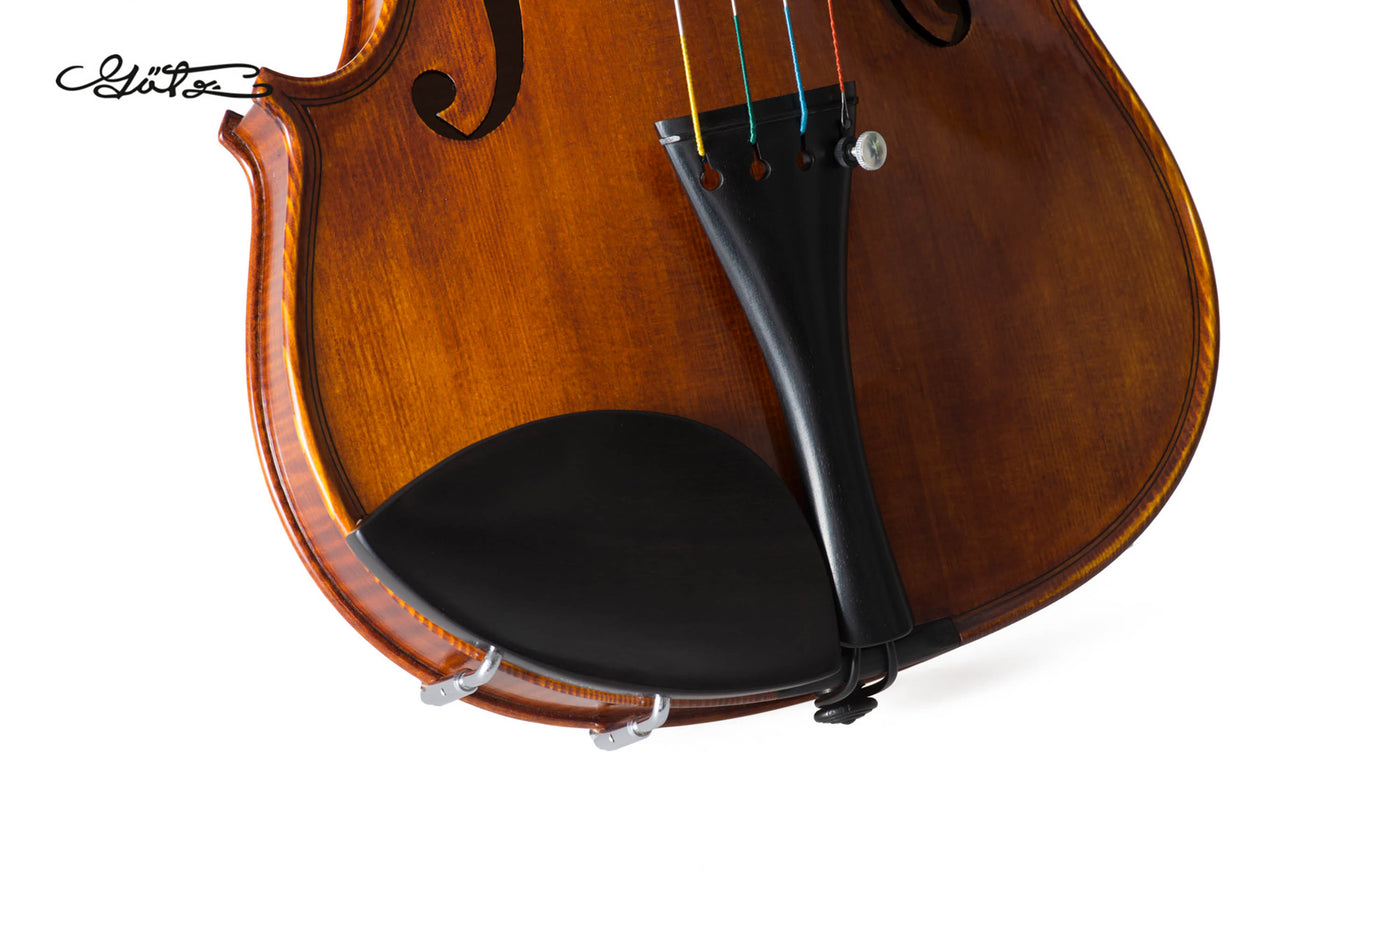 Slim Style Kinnhalter Violine 4/4 Ebenholz, ZK-256